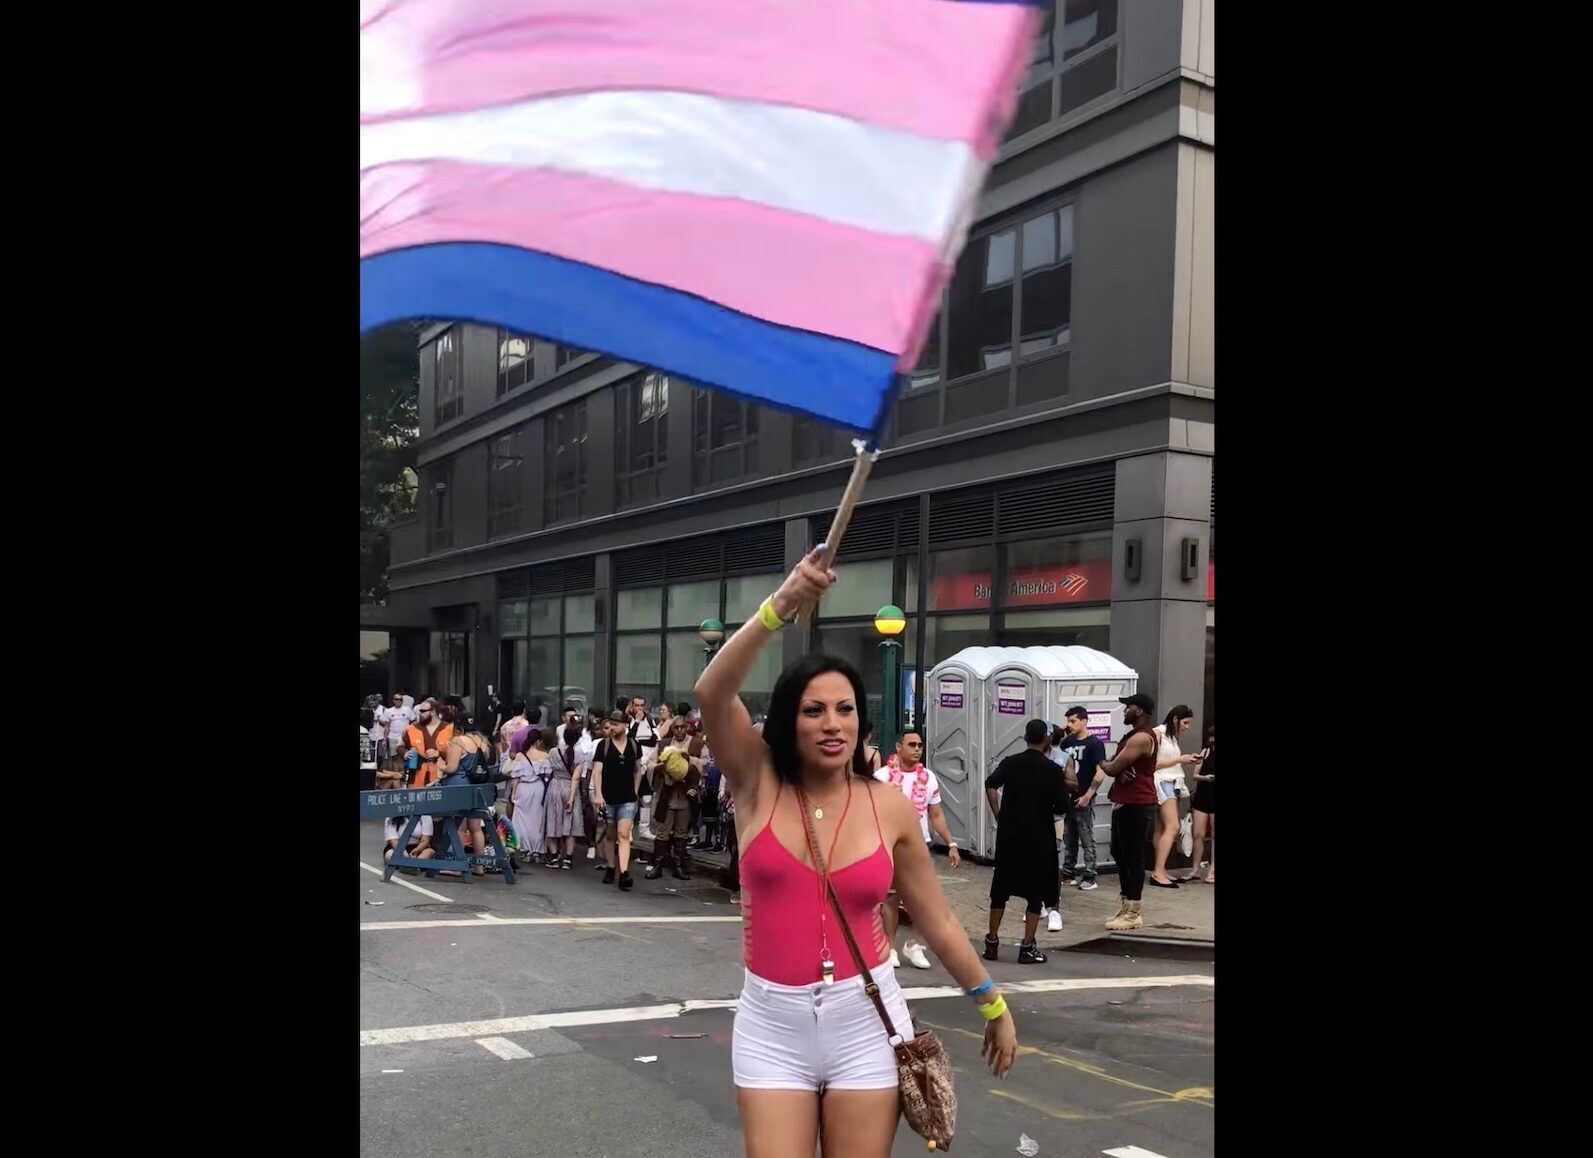 Trans activist Melissa Nuñez was shot and killed in Honduras